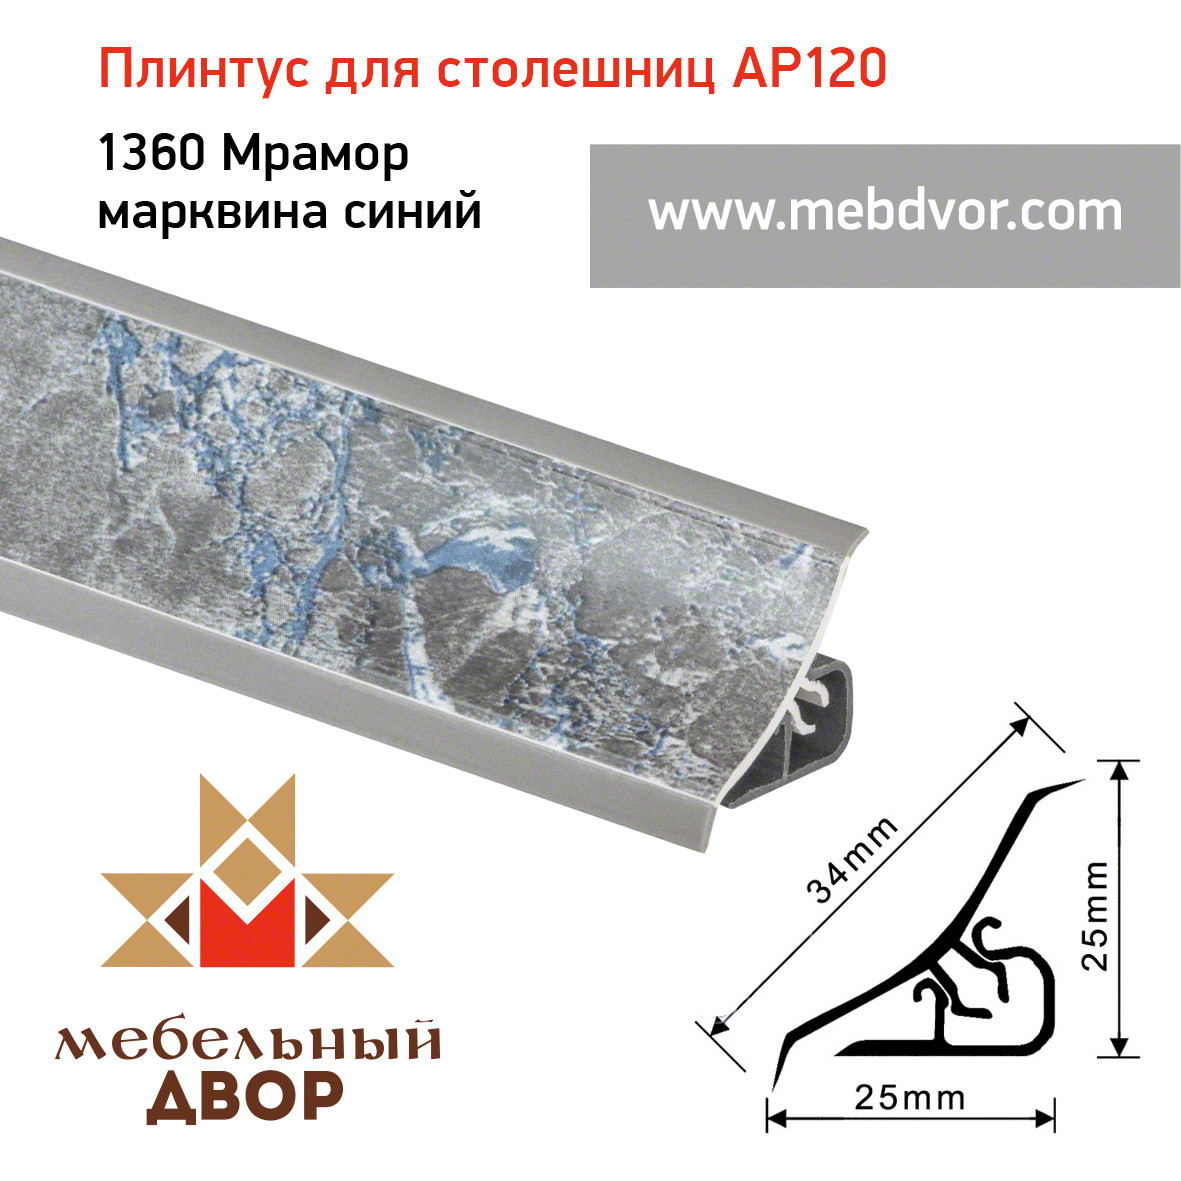 Плинтус для столешниц AP120 (1360_Мрамор марквина синий), 3000 mm